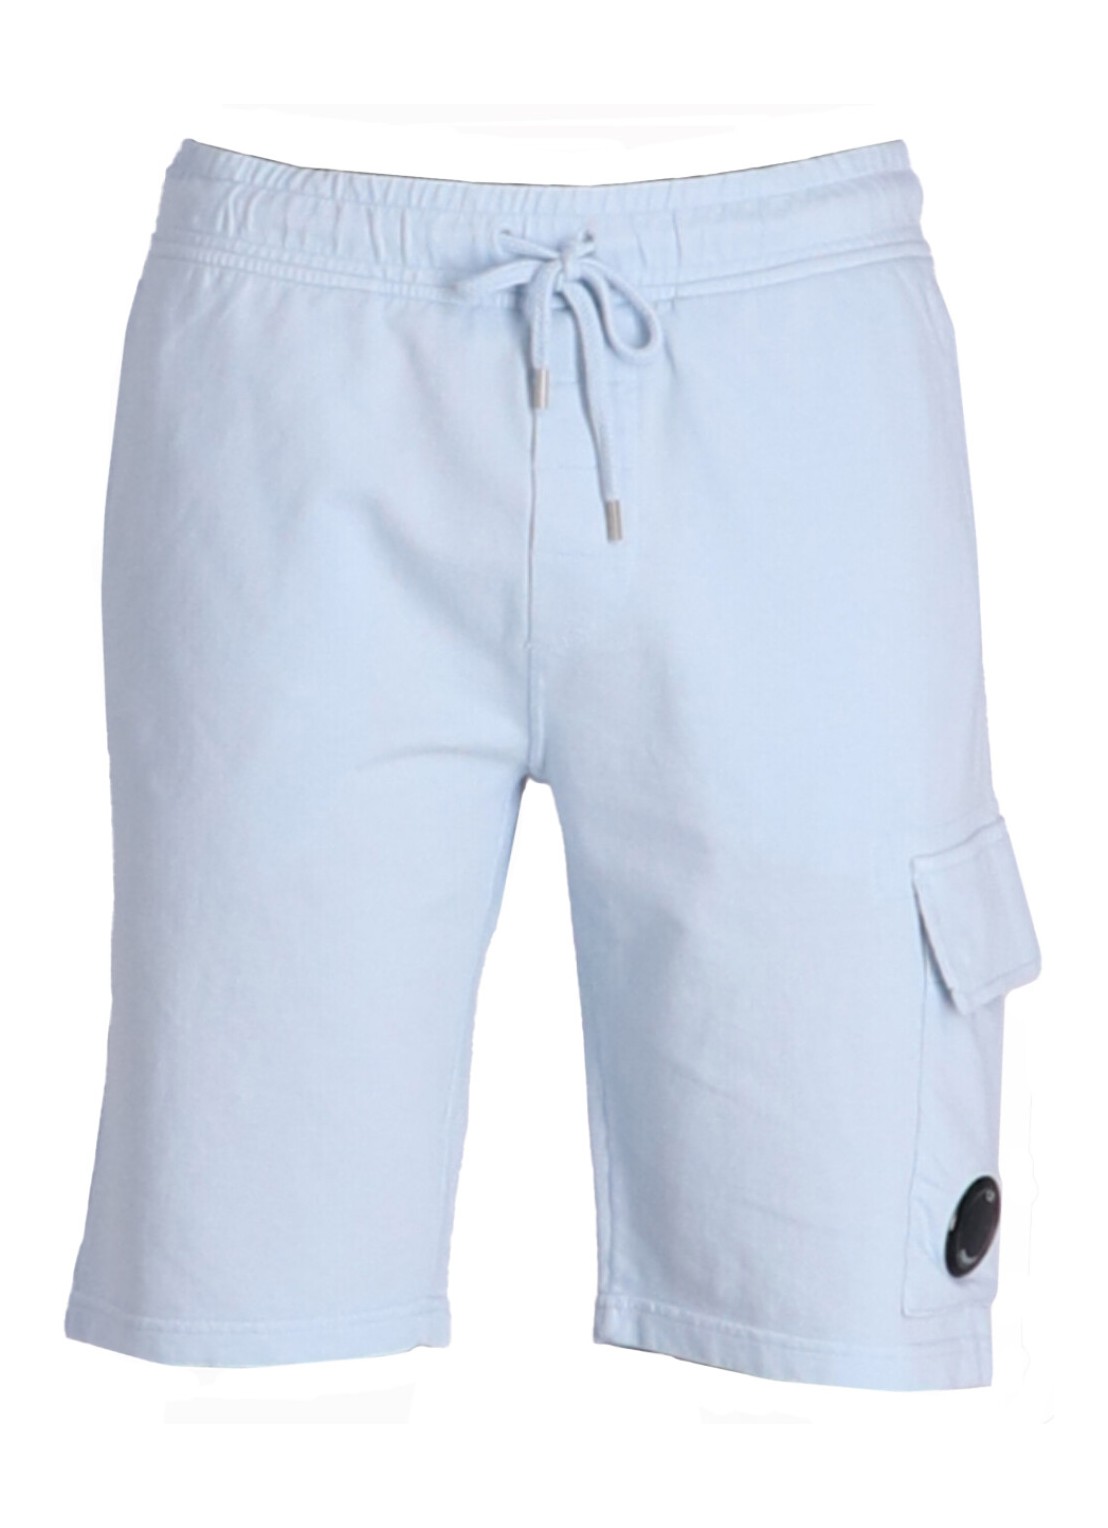 Pantalon corto c.p.company short pant man light fleece utility shorts 16cmsb021a002246g 806 talla S
